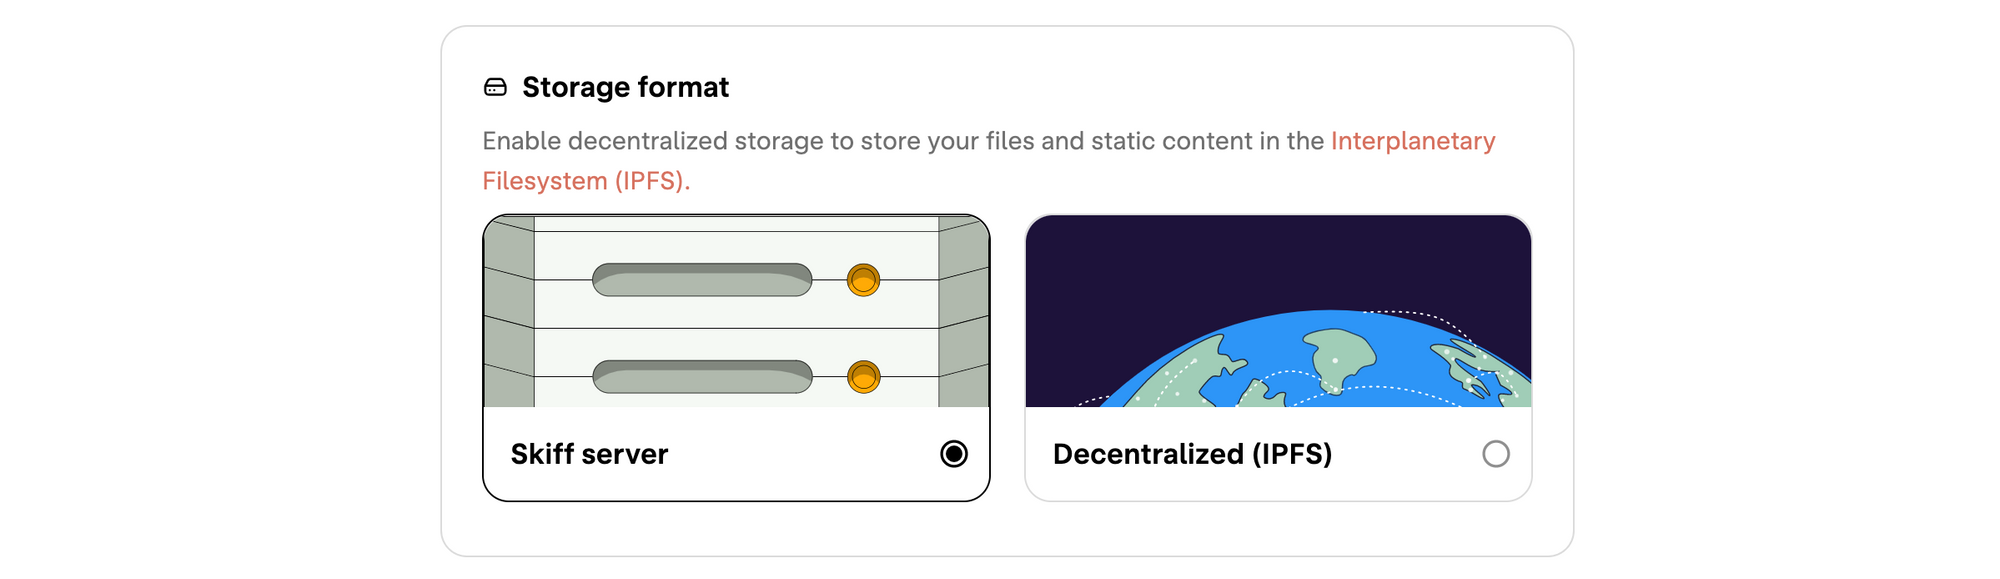 Skiff storage format options